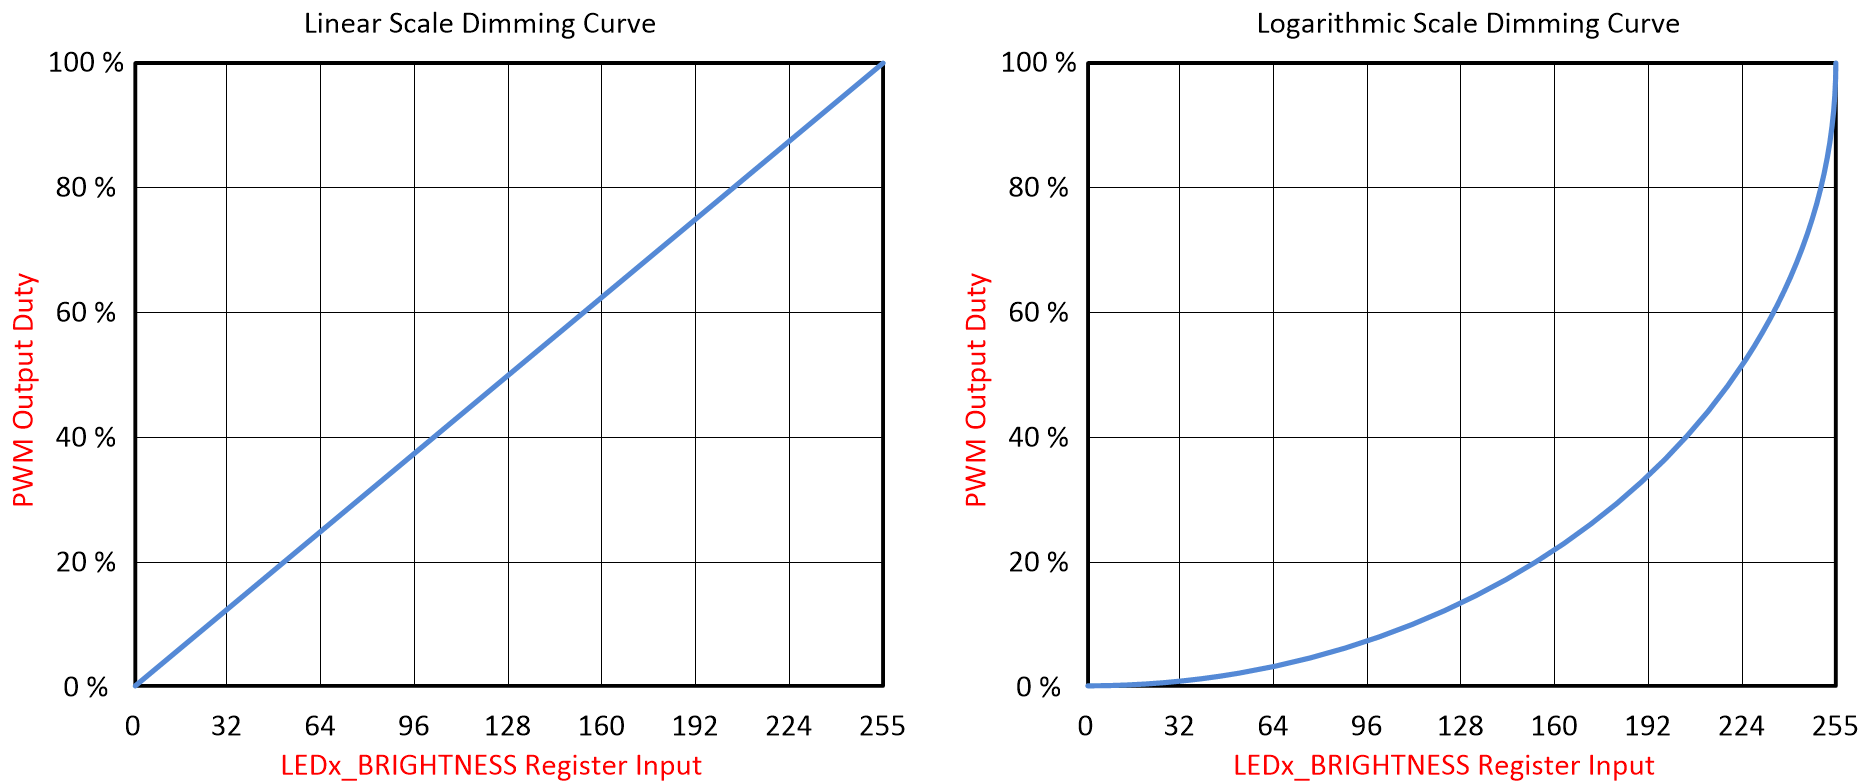 LP5018 LP5024 Logarithmic vs Linear Dimming Curve